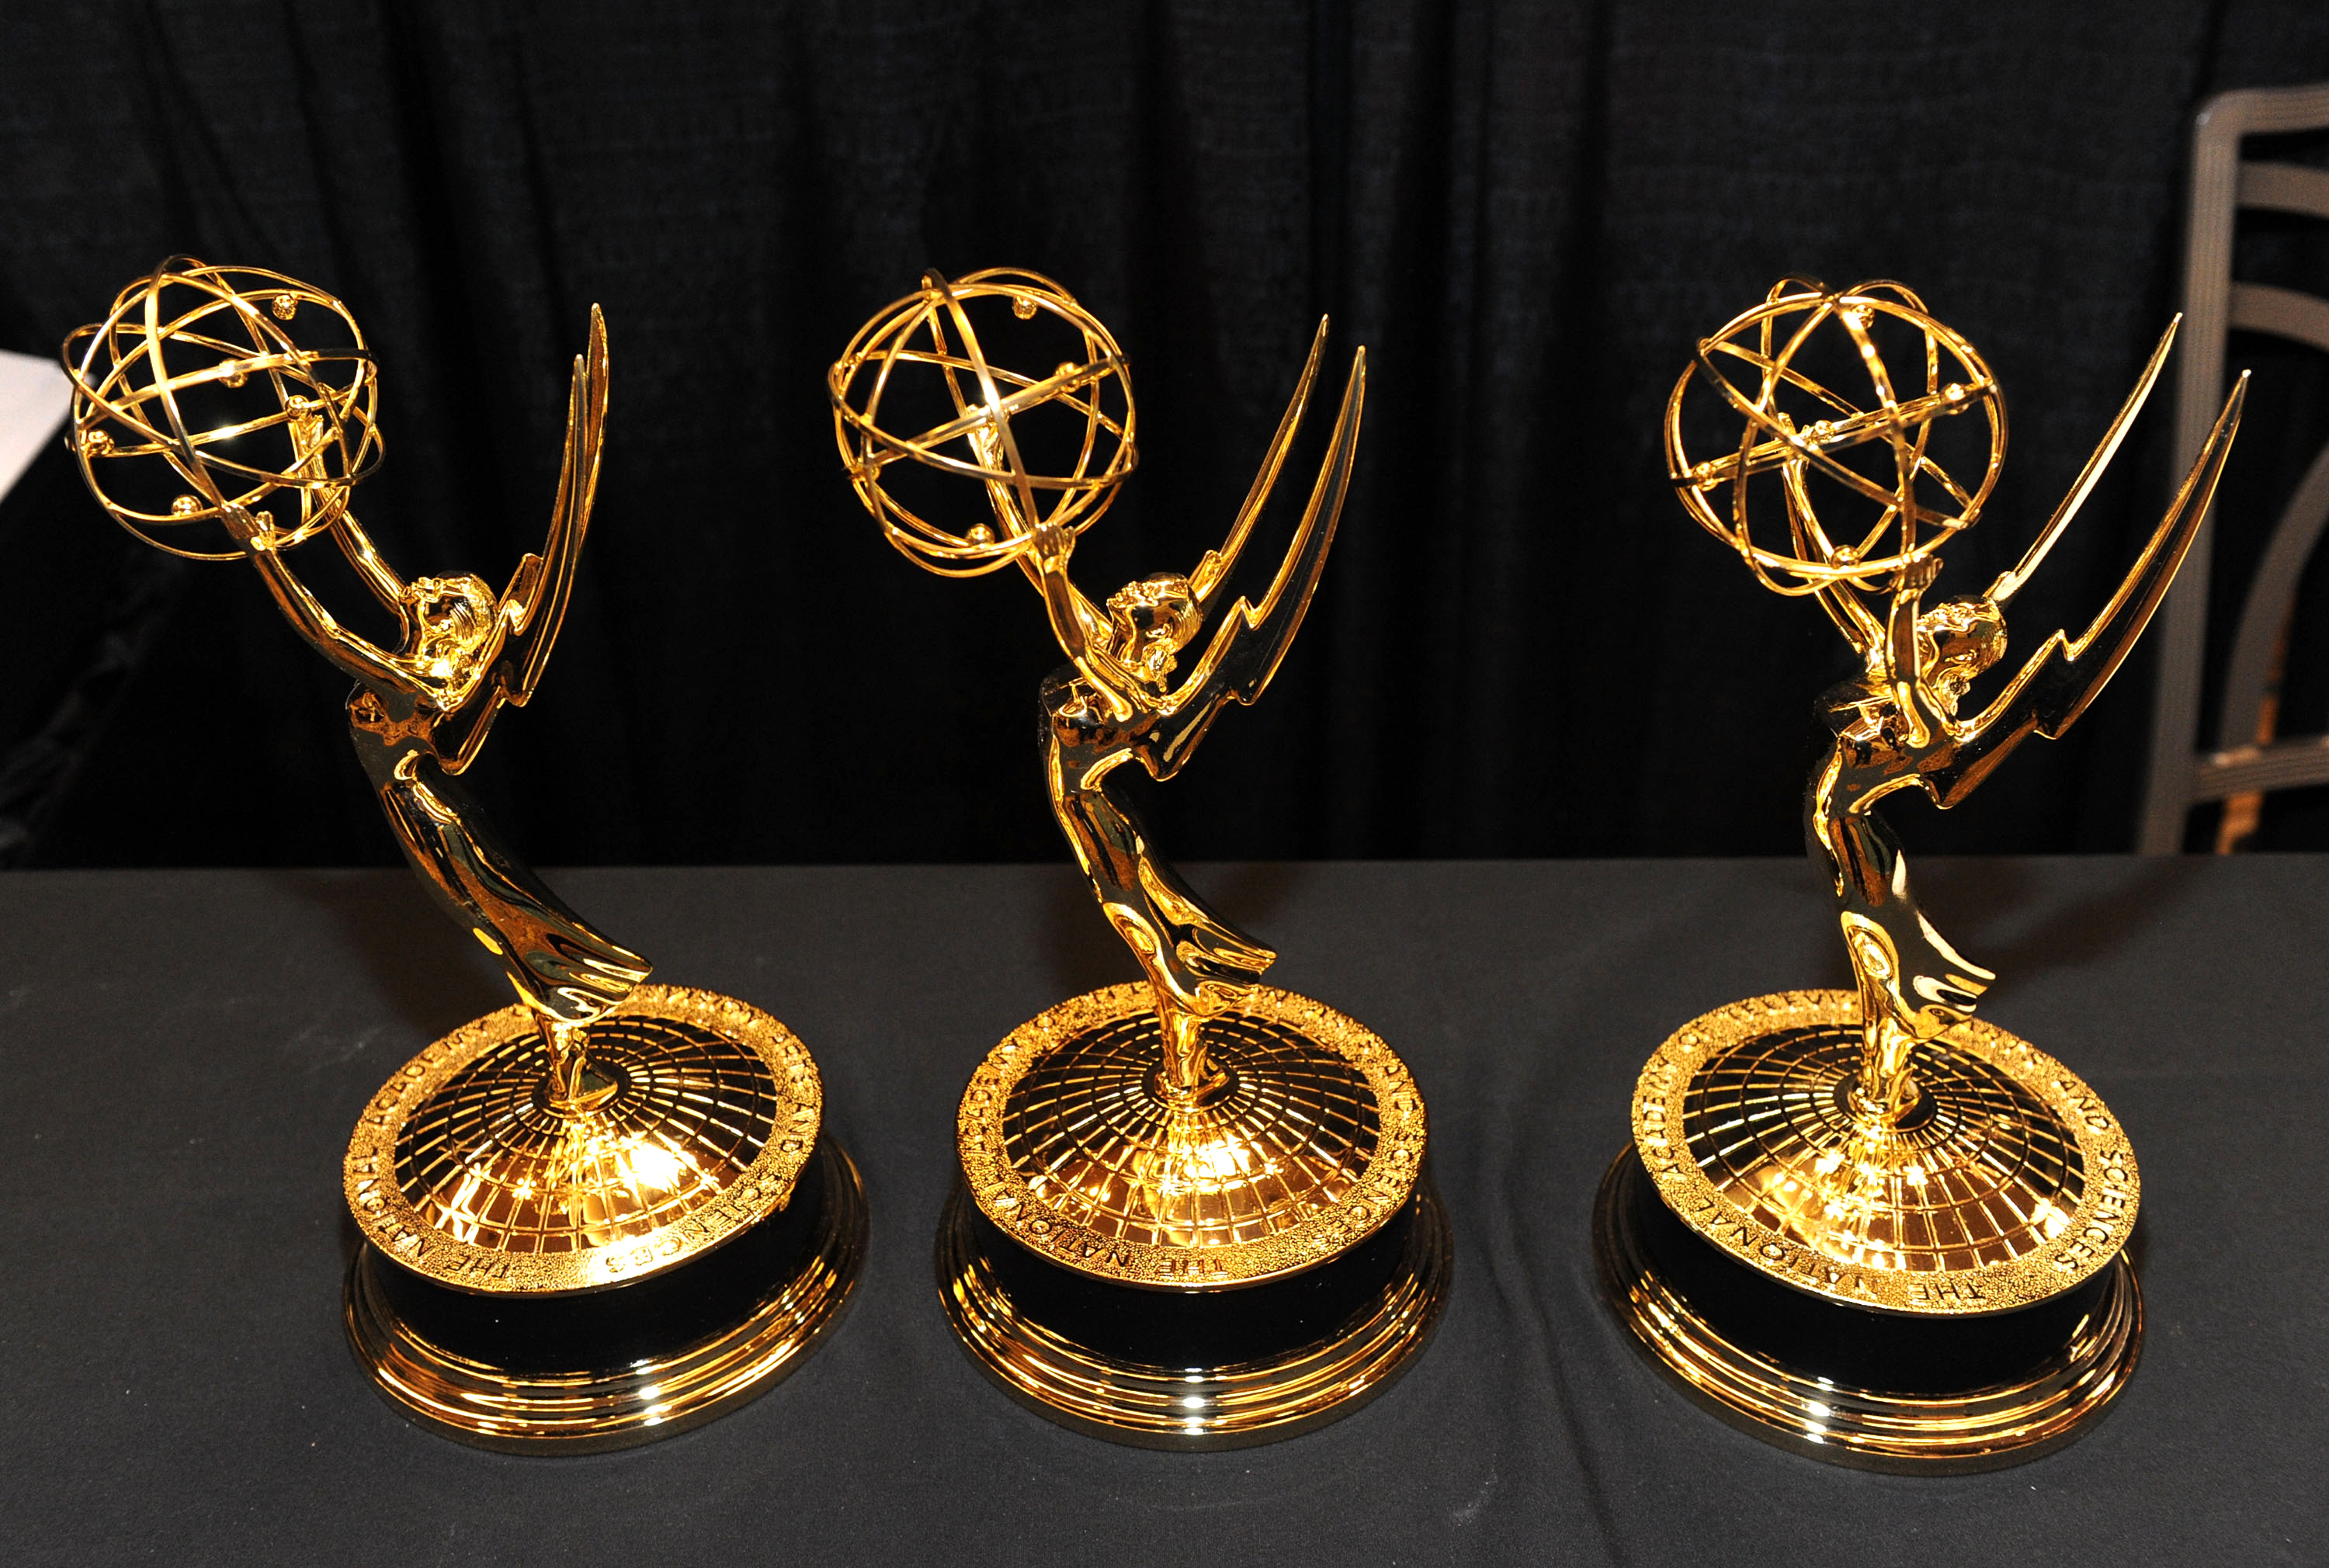 Emmy awards.